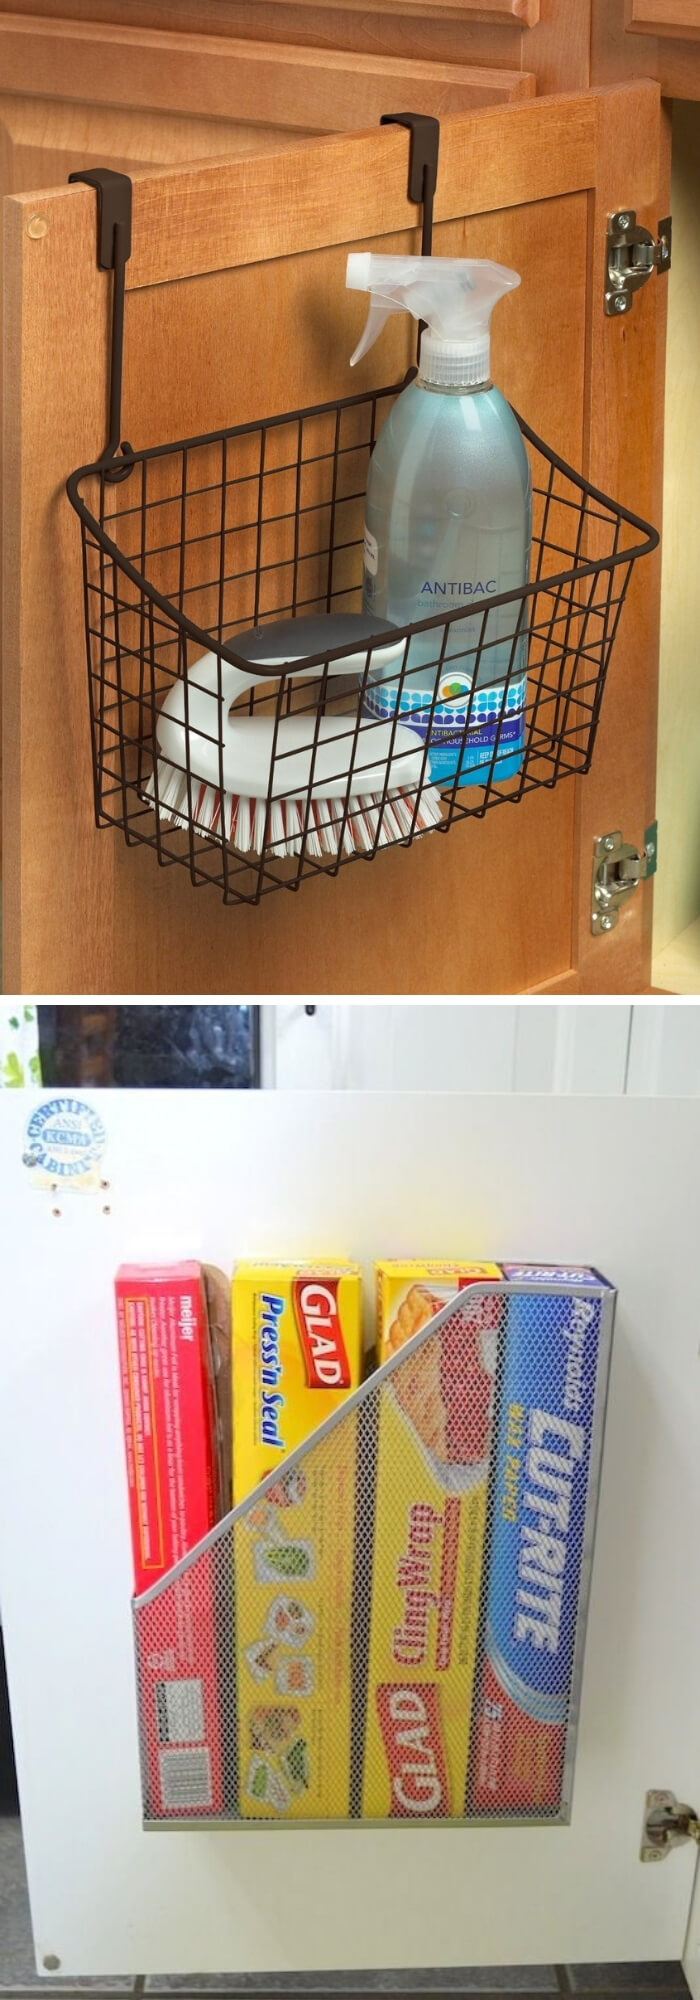 A basket that hooks over your cabinet door